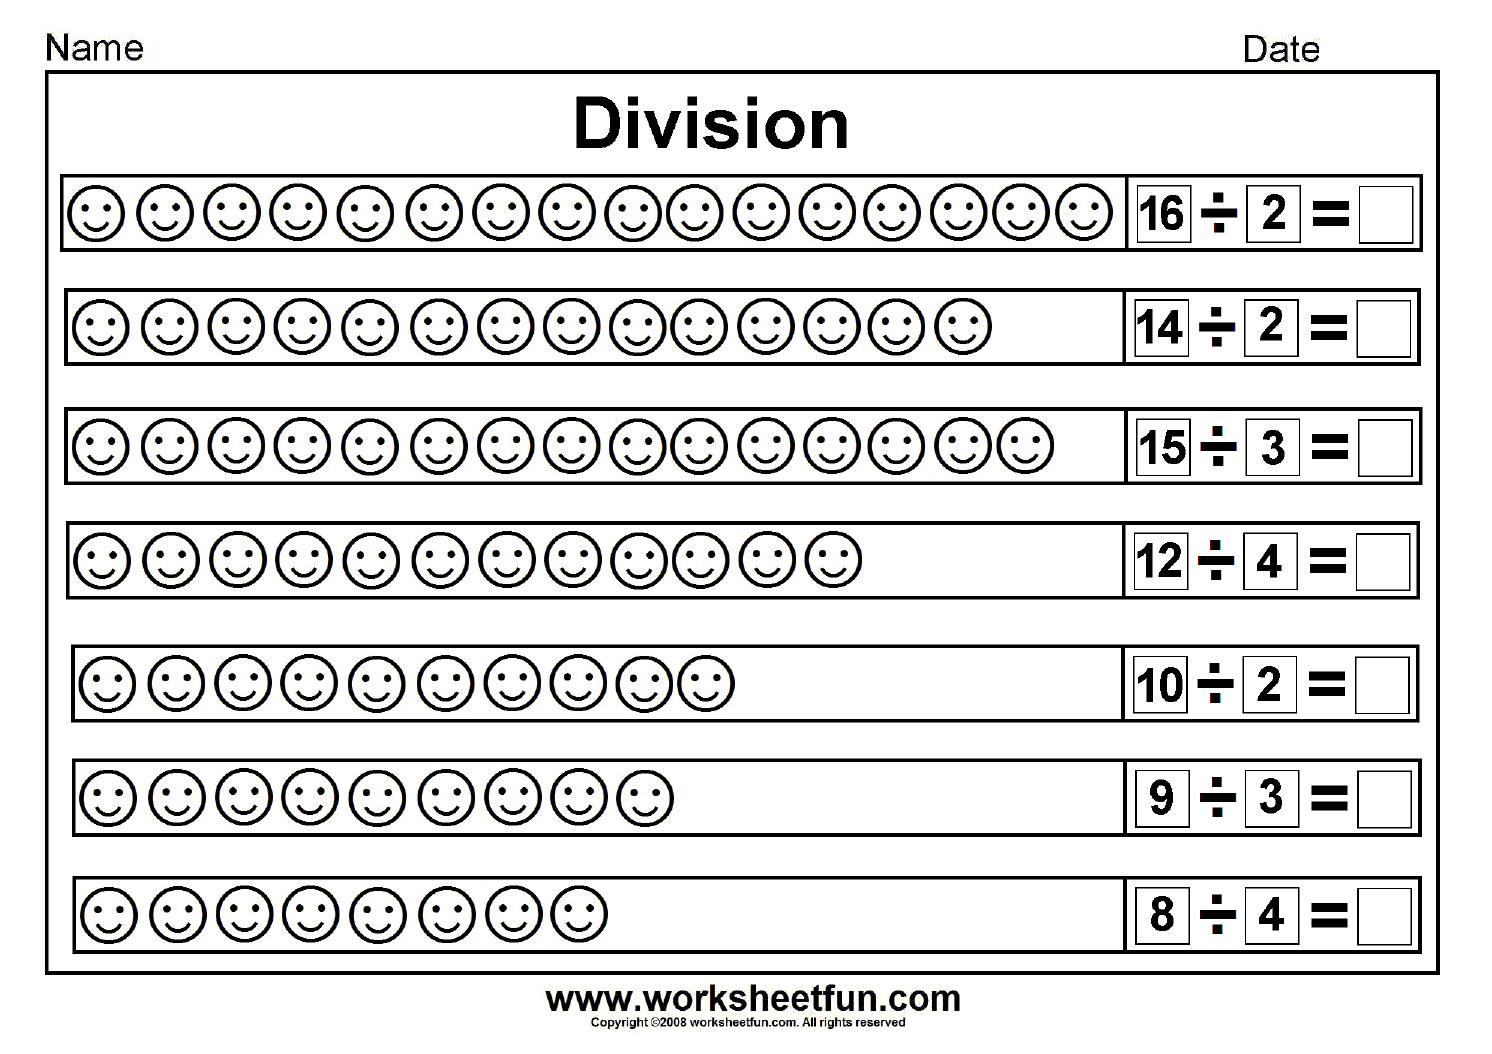 Math Division Worksheet For Grade 4 | Printable Worksheets with regard to Printable Multiplication And Division Worksheets For 3Rd Grade